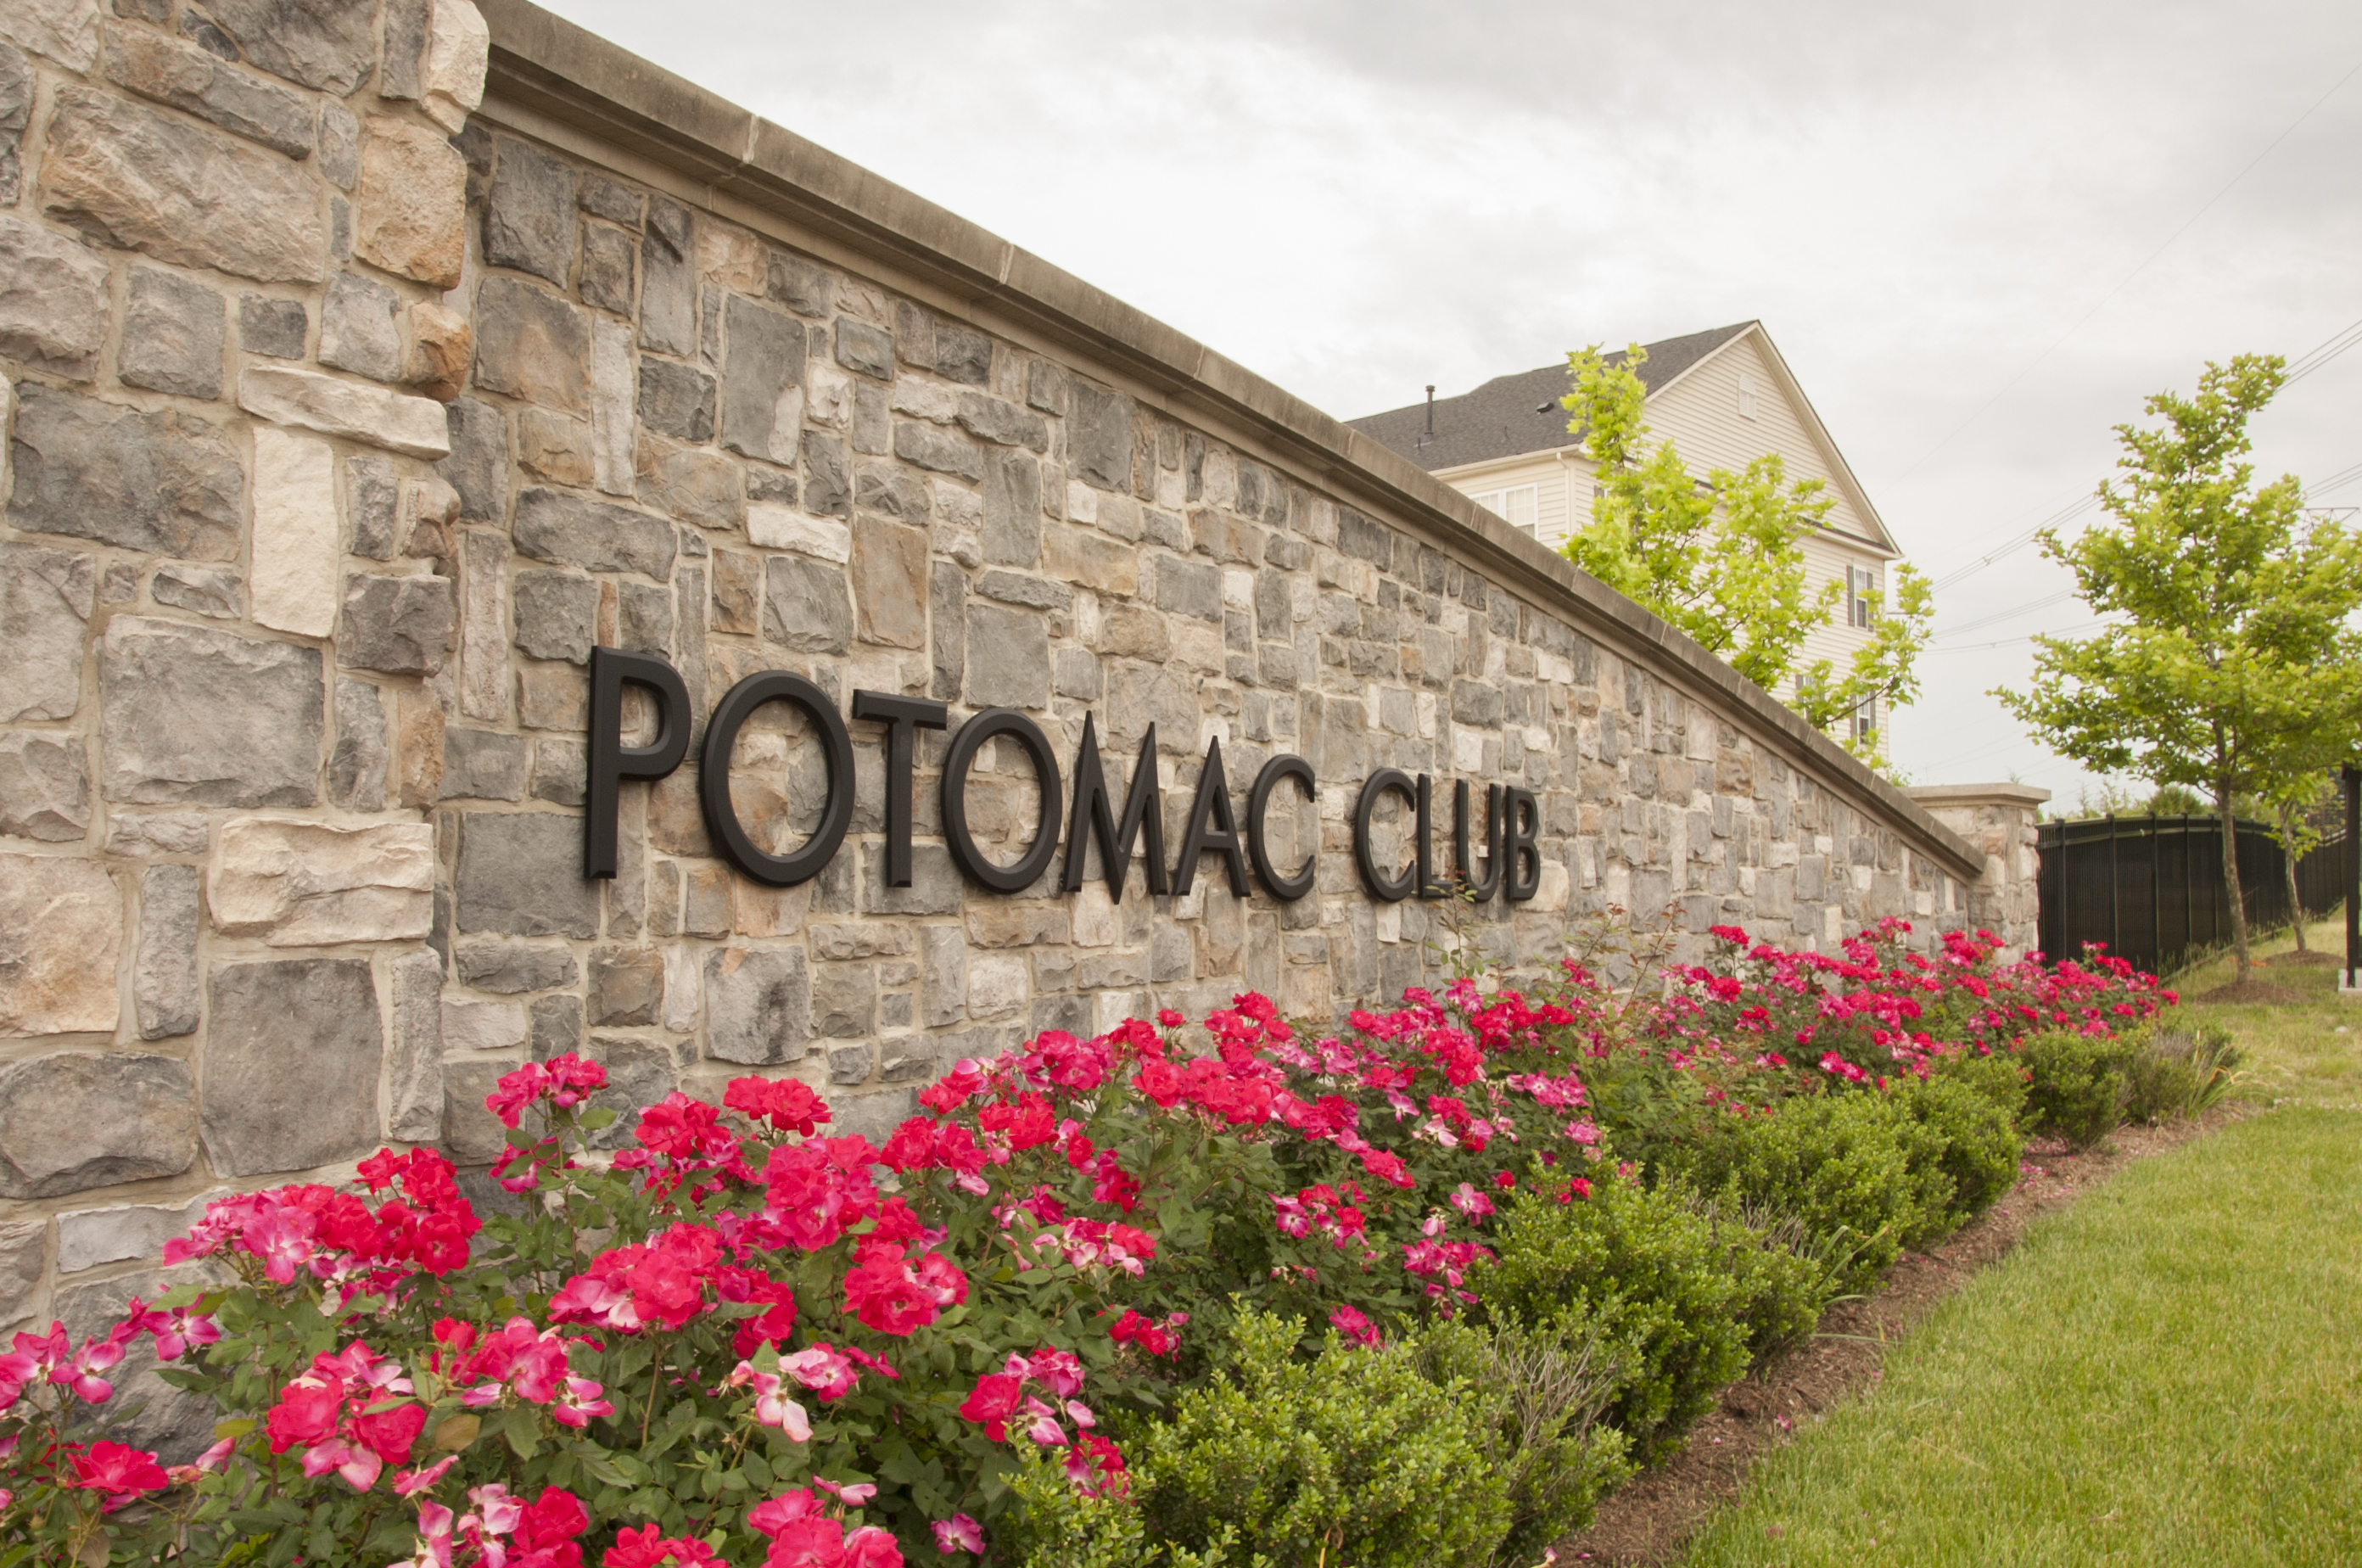 Potomac Club Woodbridge, VA